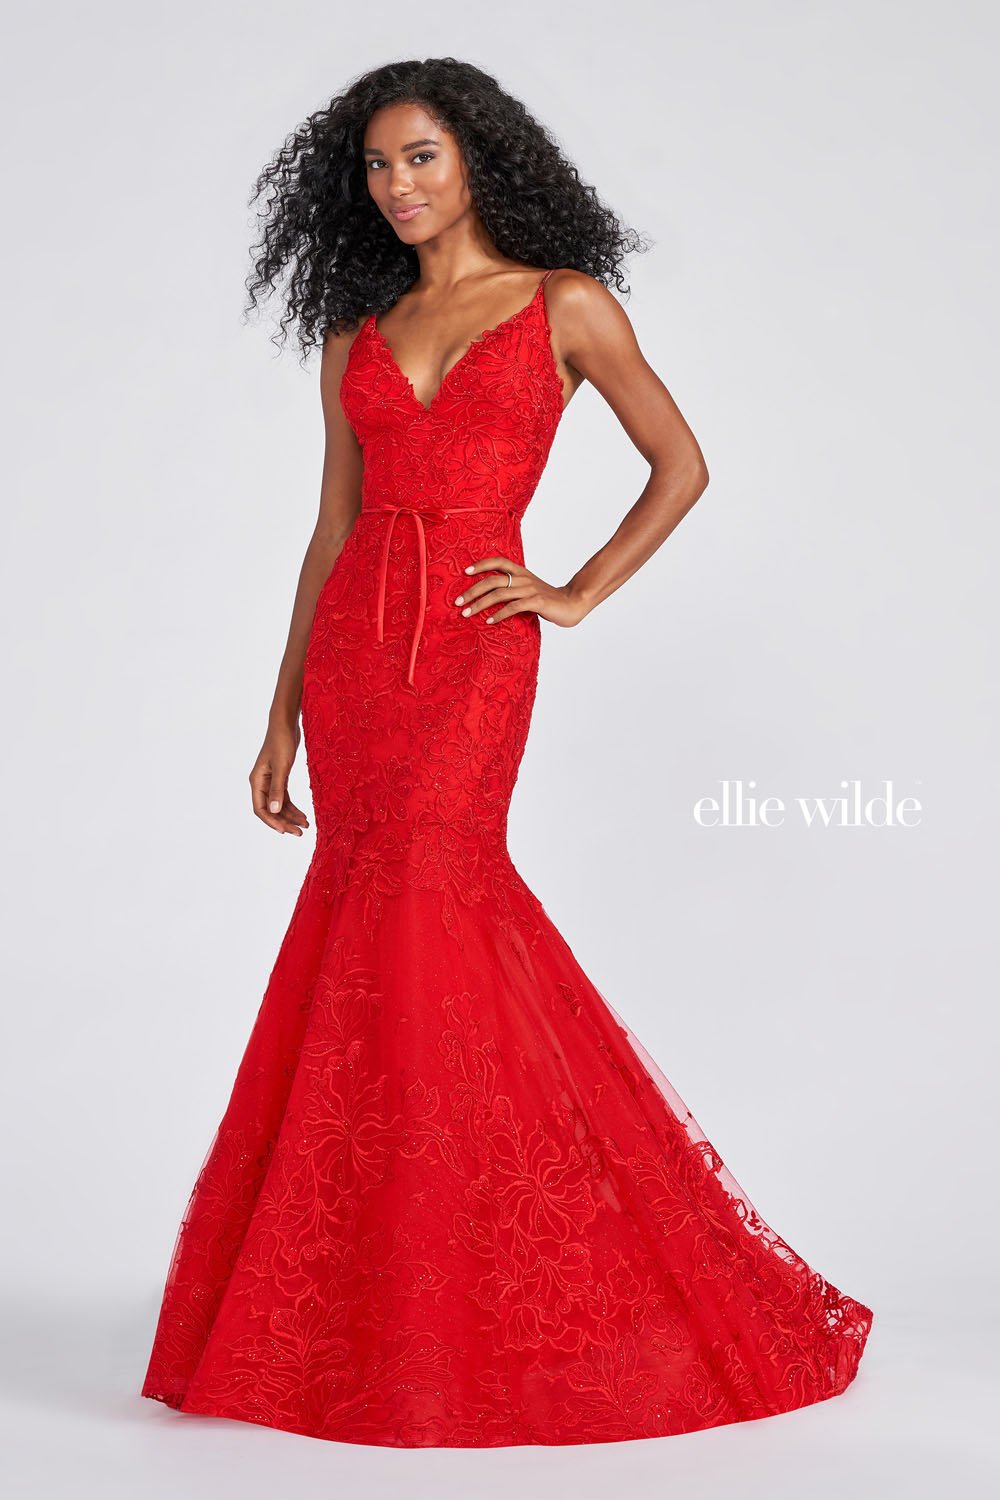 Ellie Wilde Red EW122017 Prom Dress Image.  Red formal dress.